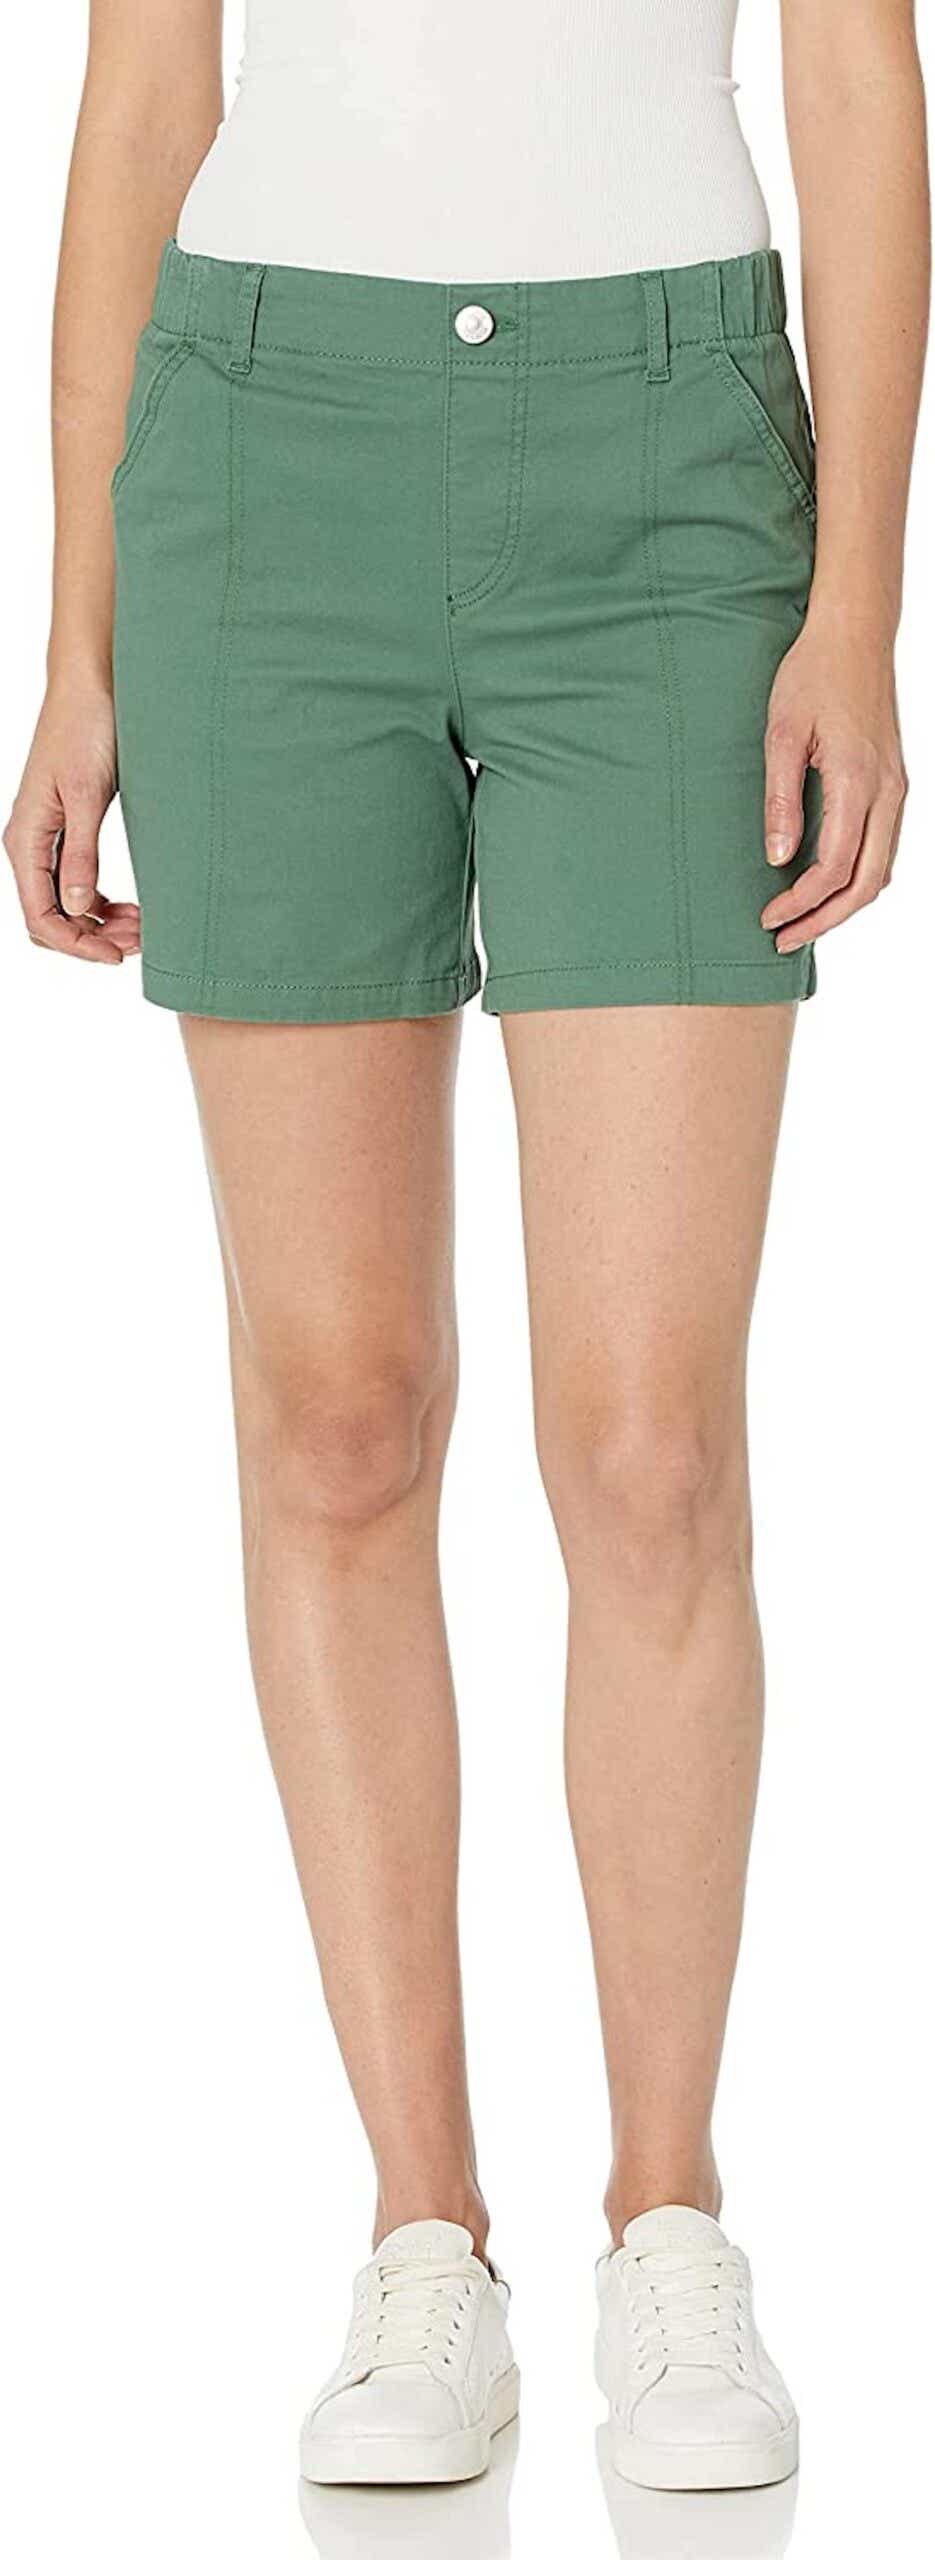 long green shorts